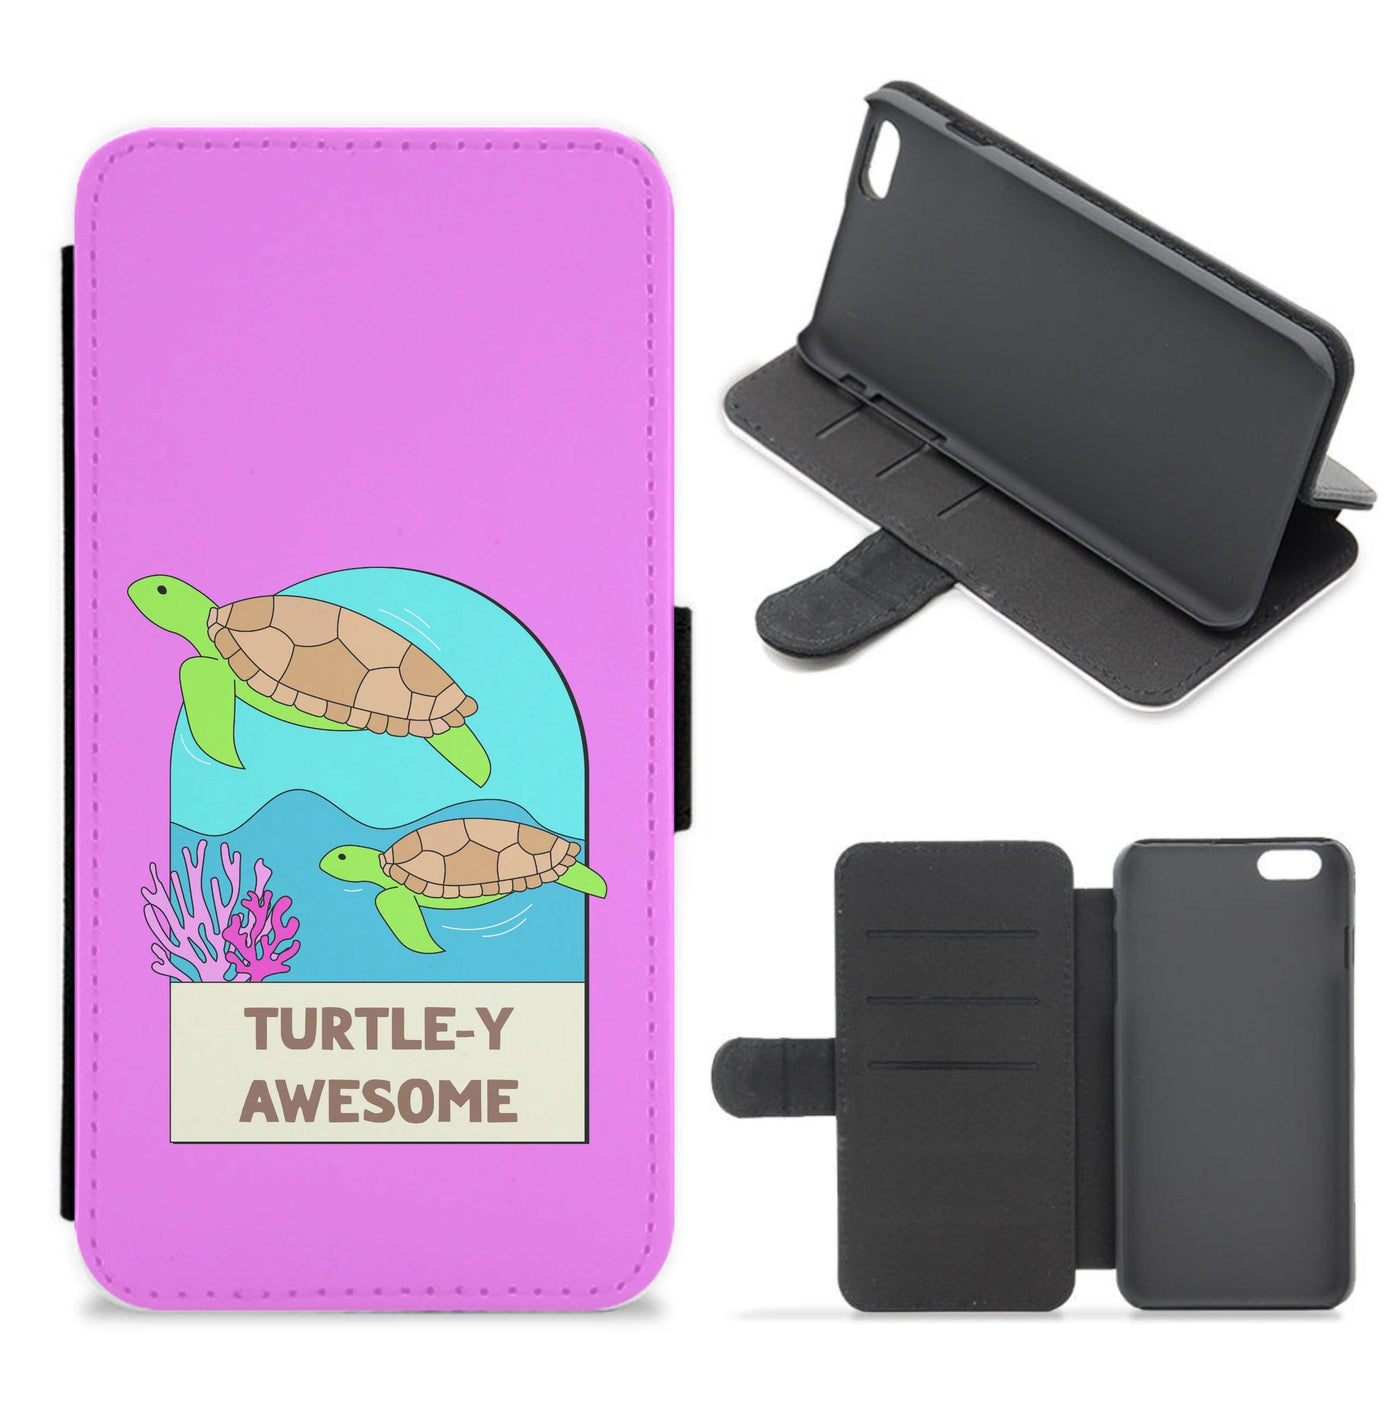 Turtle-y Awesome - Sealife Flip / Wallet Phone Case